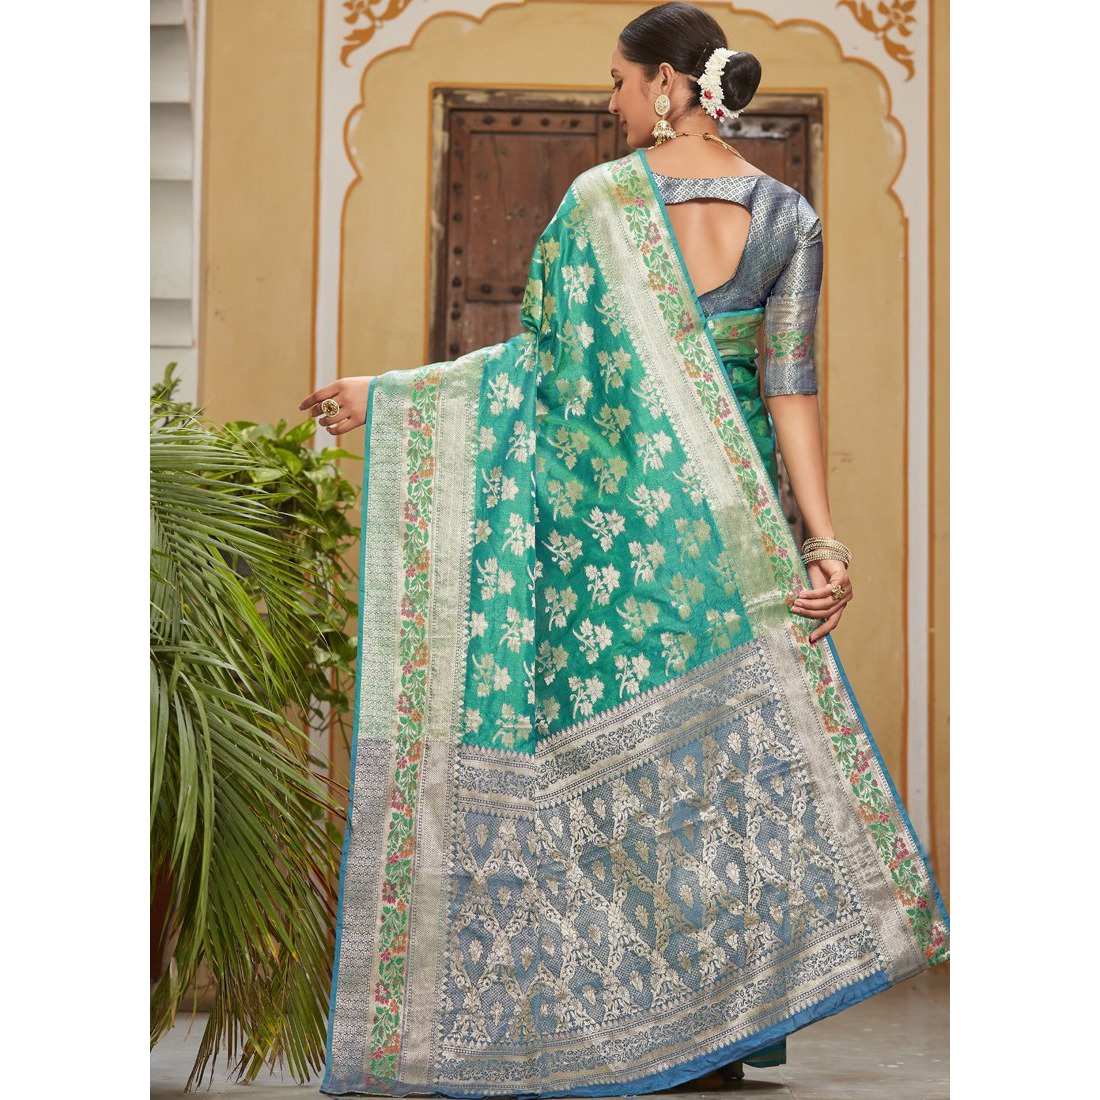 Designer Turquoise Banarasi Silk Traditional Saree For Women's